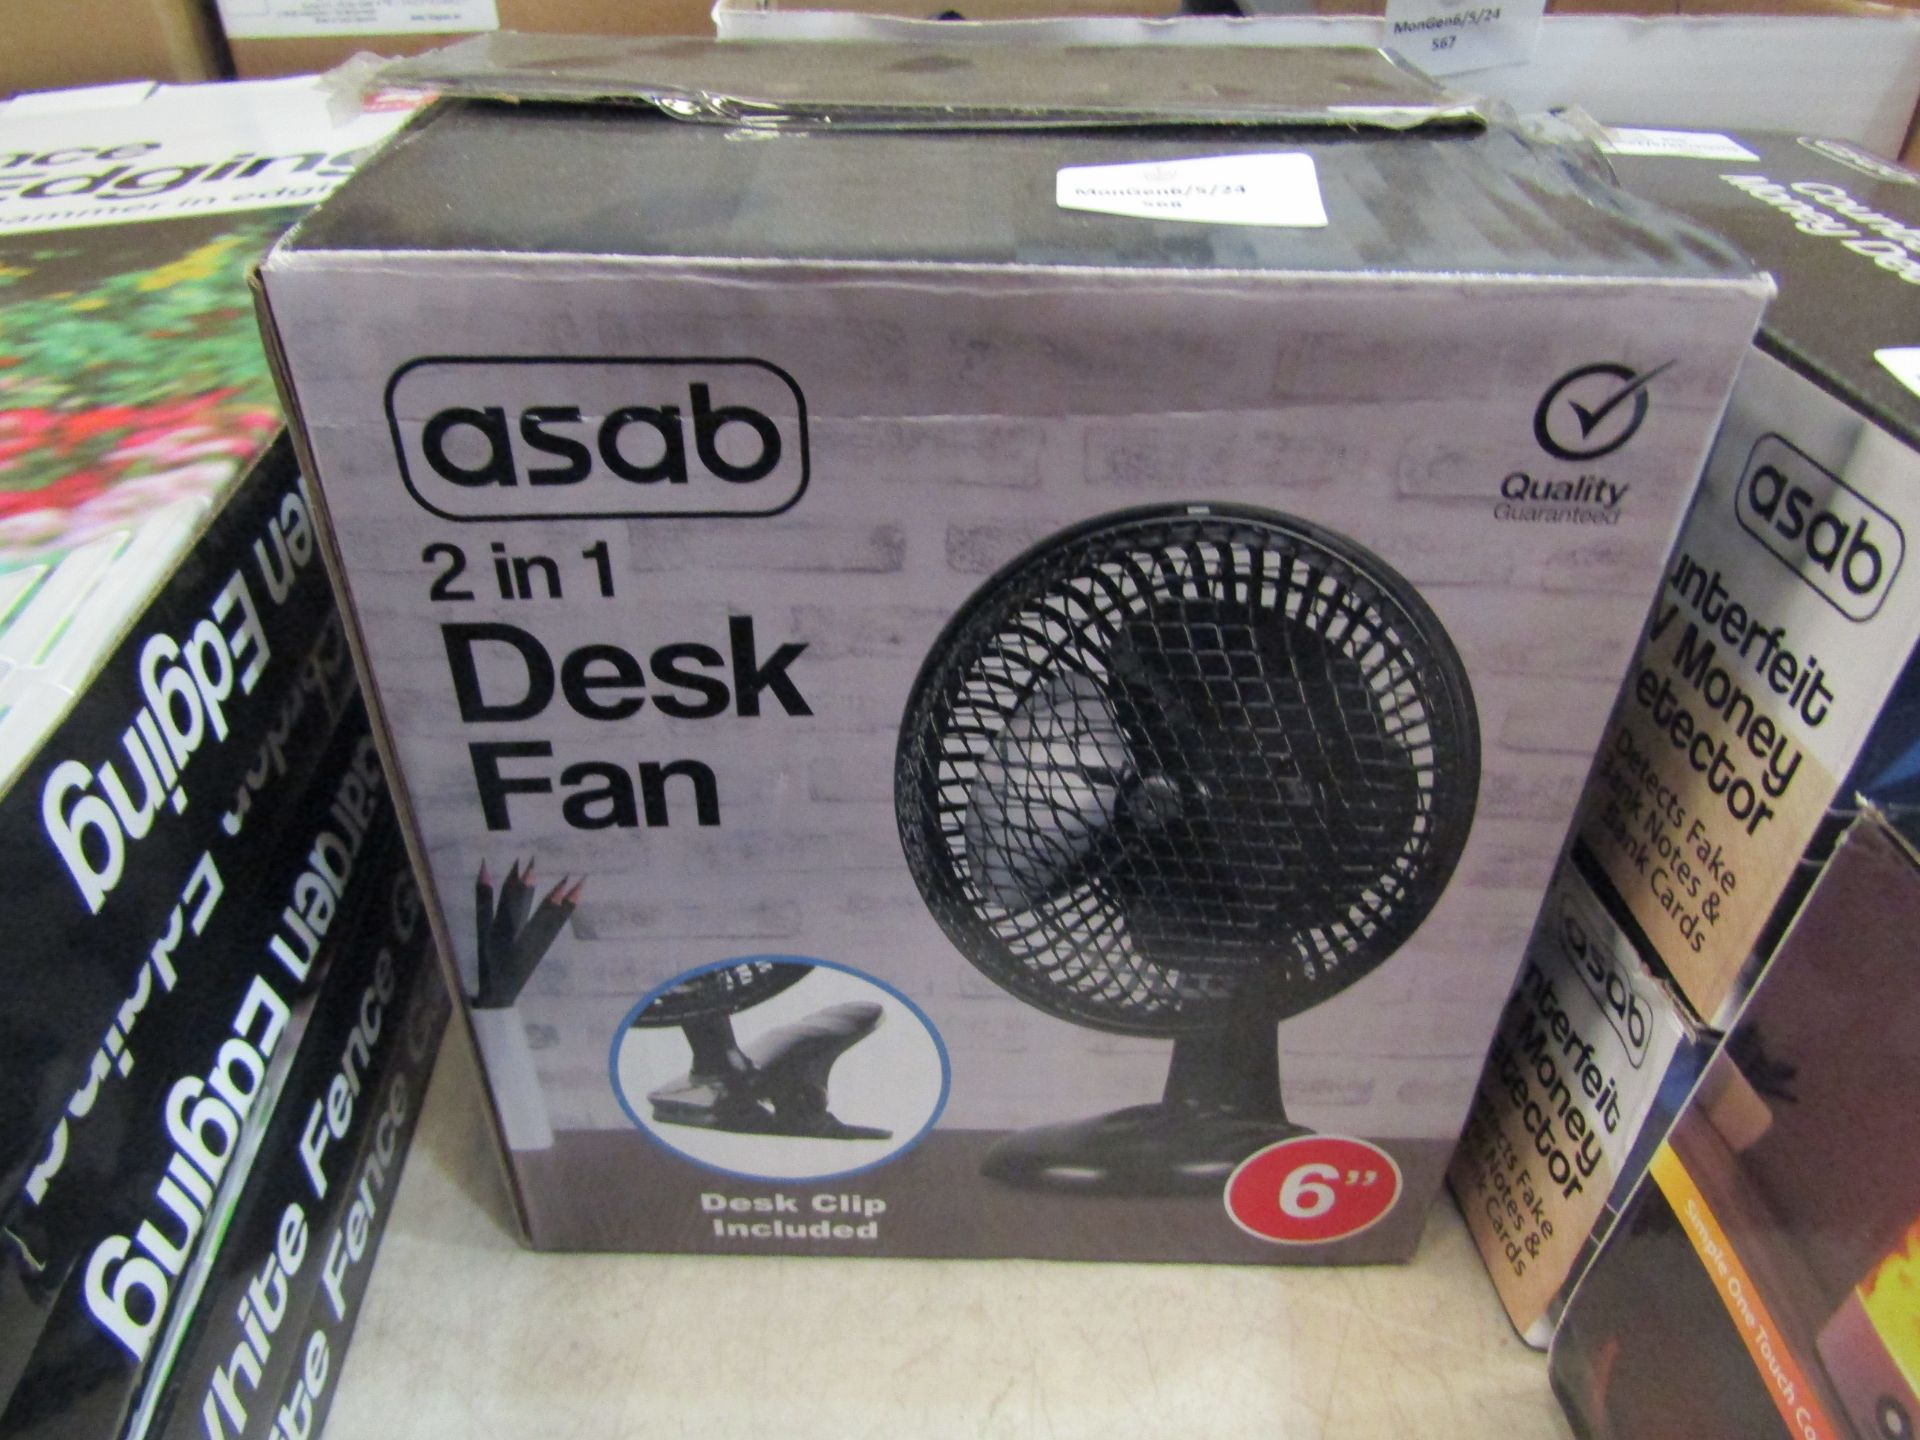 Asab 2 in 1 Desk Fan, 6" Unchecked & Boxed.